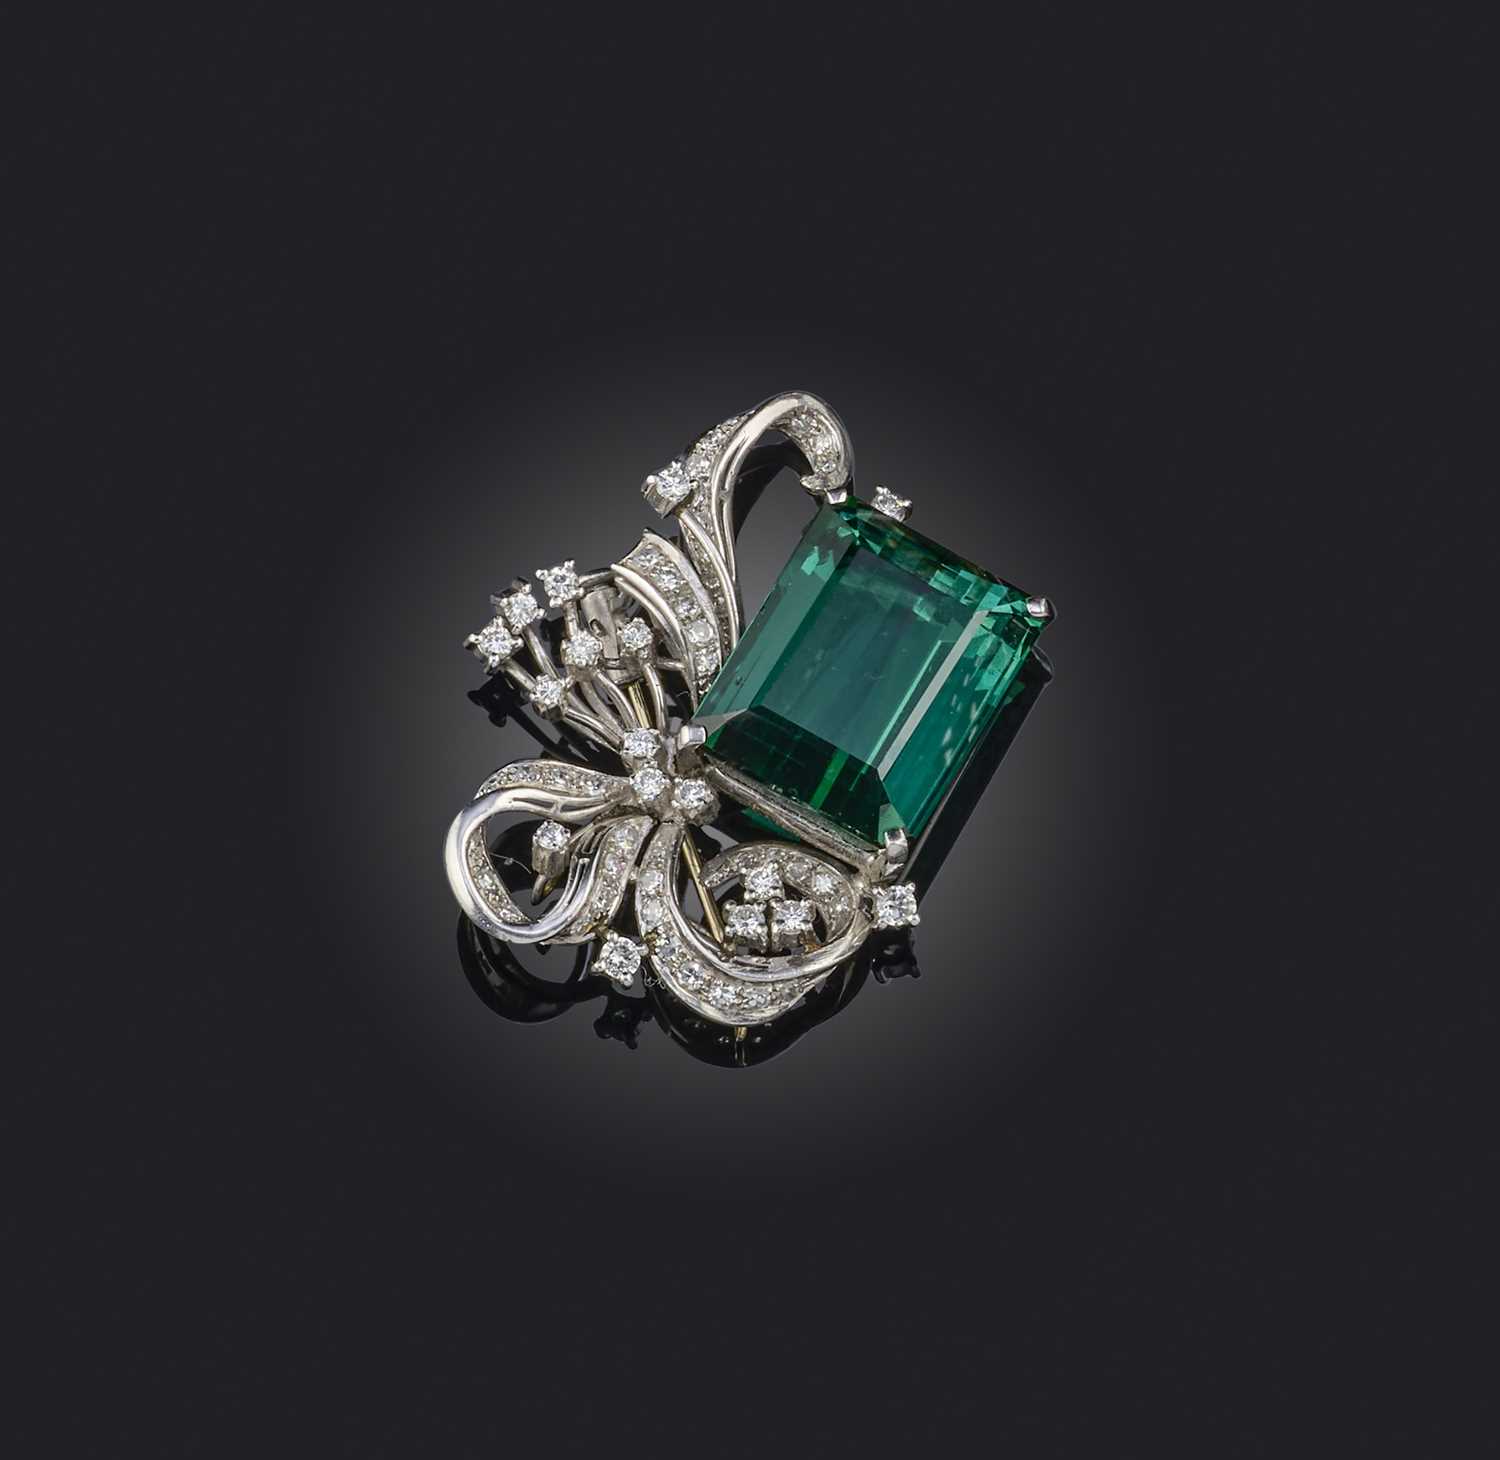 A tourmaline and diamond brooch, set with a step-cut tourmaline of deep bluish green tint weighing